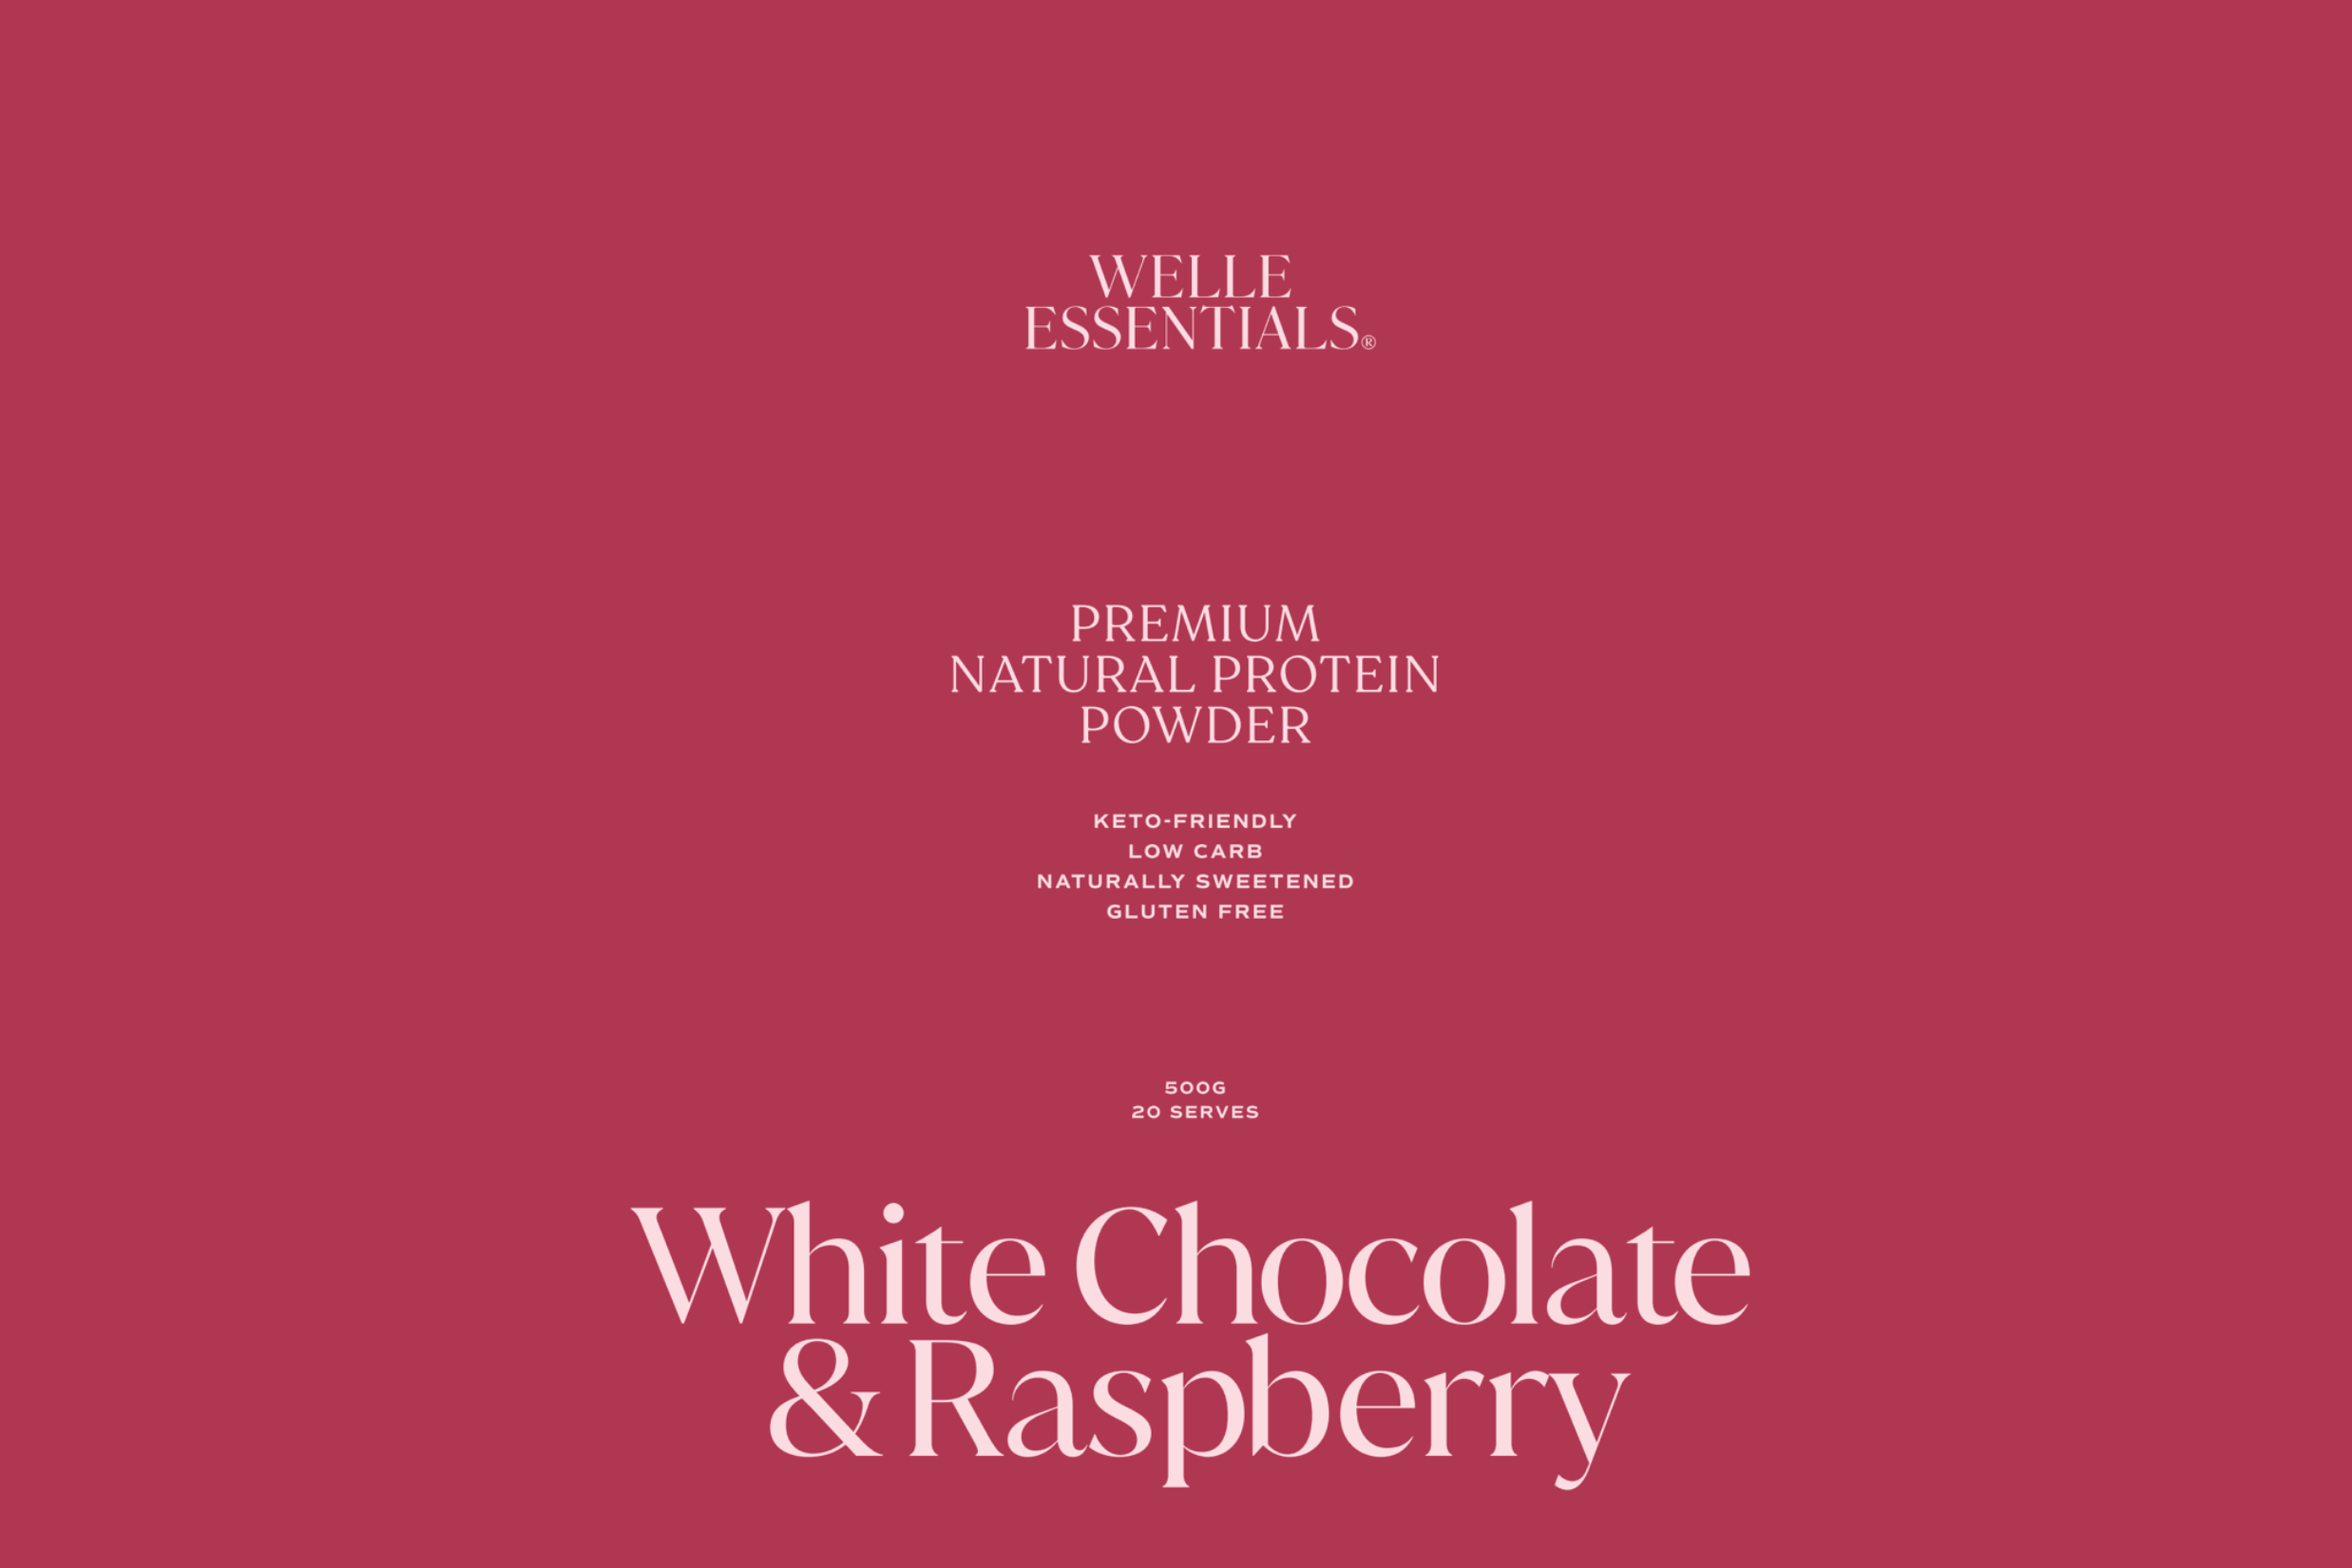 Premium Natural Protein - White Chocolate & Raspberry